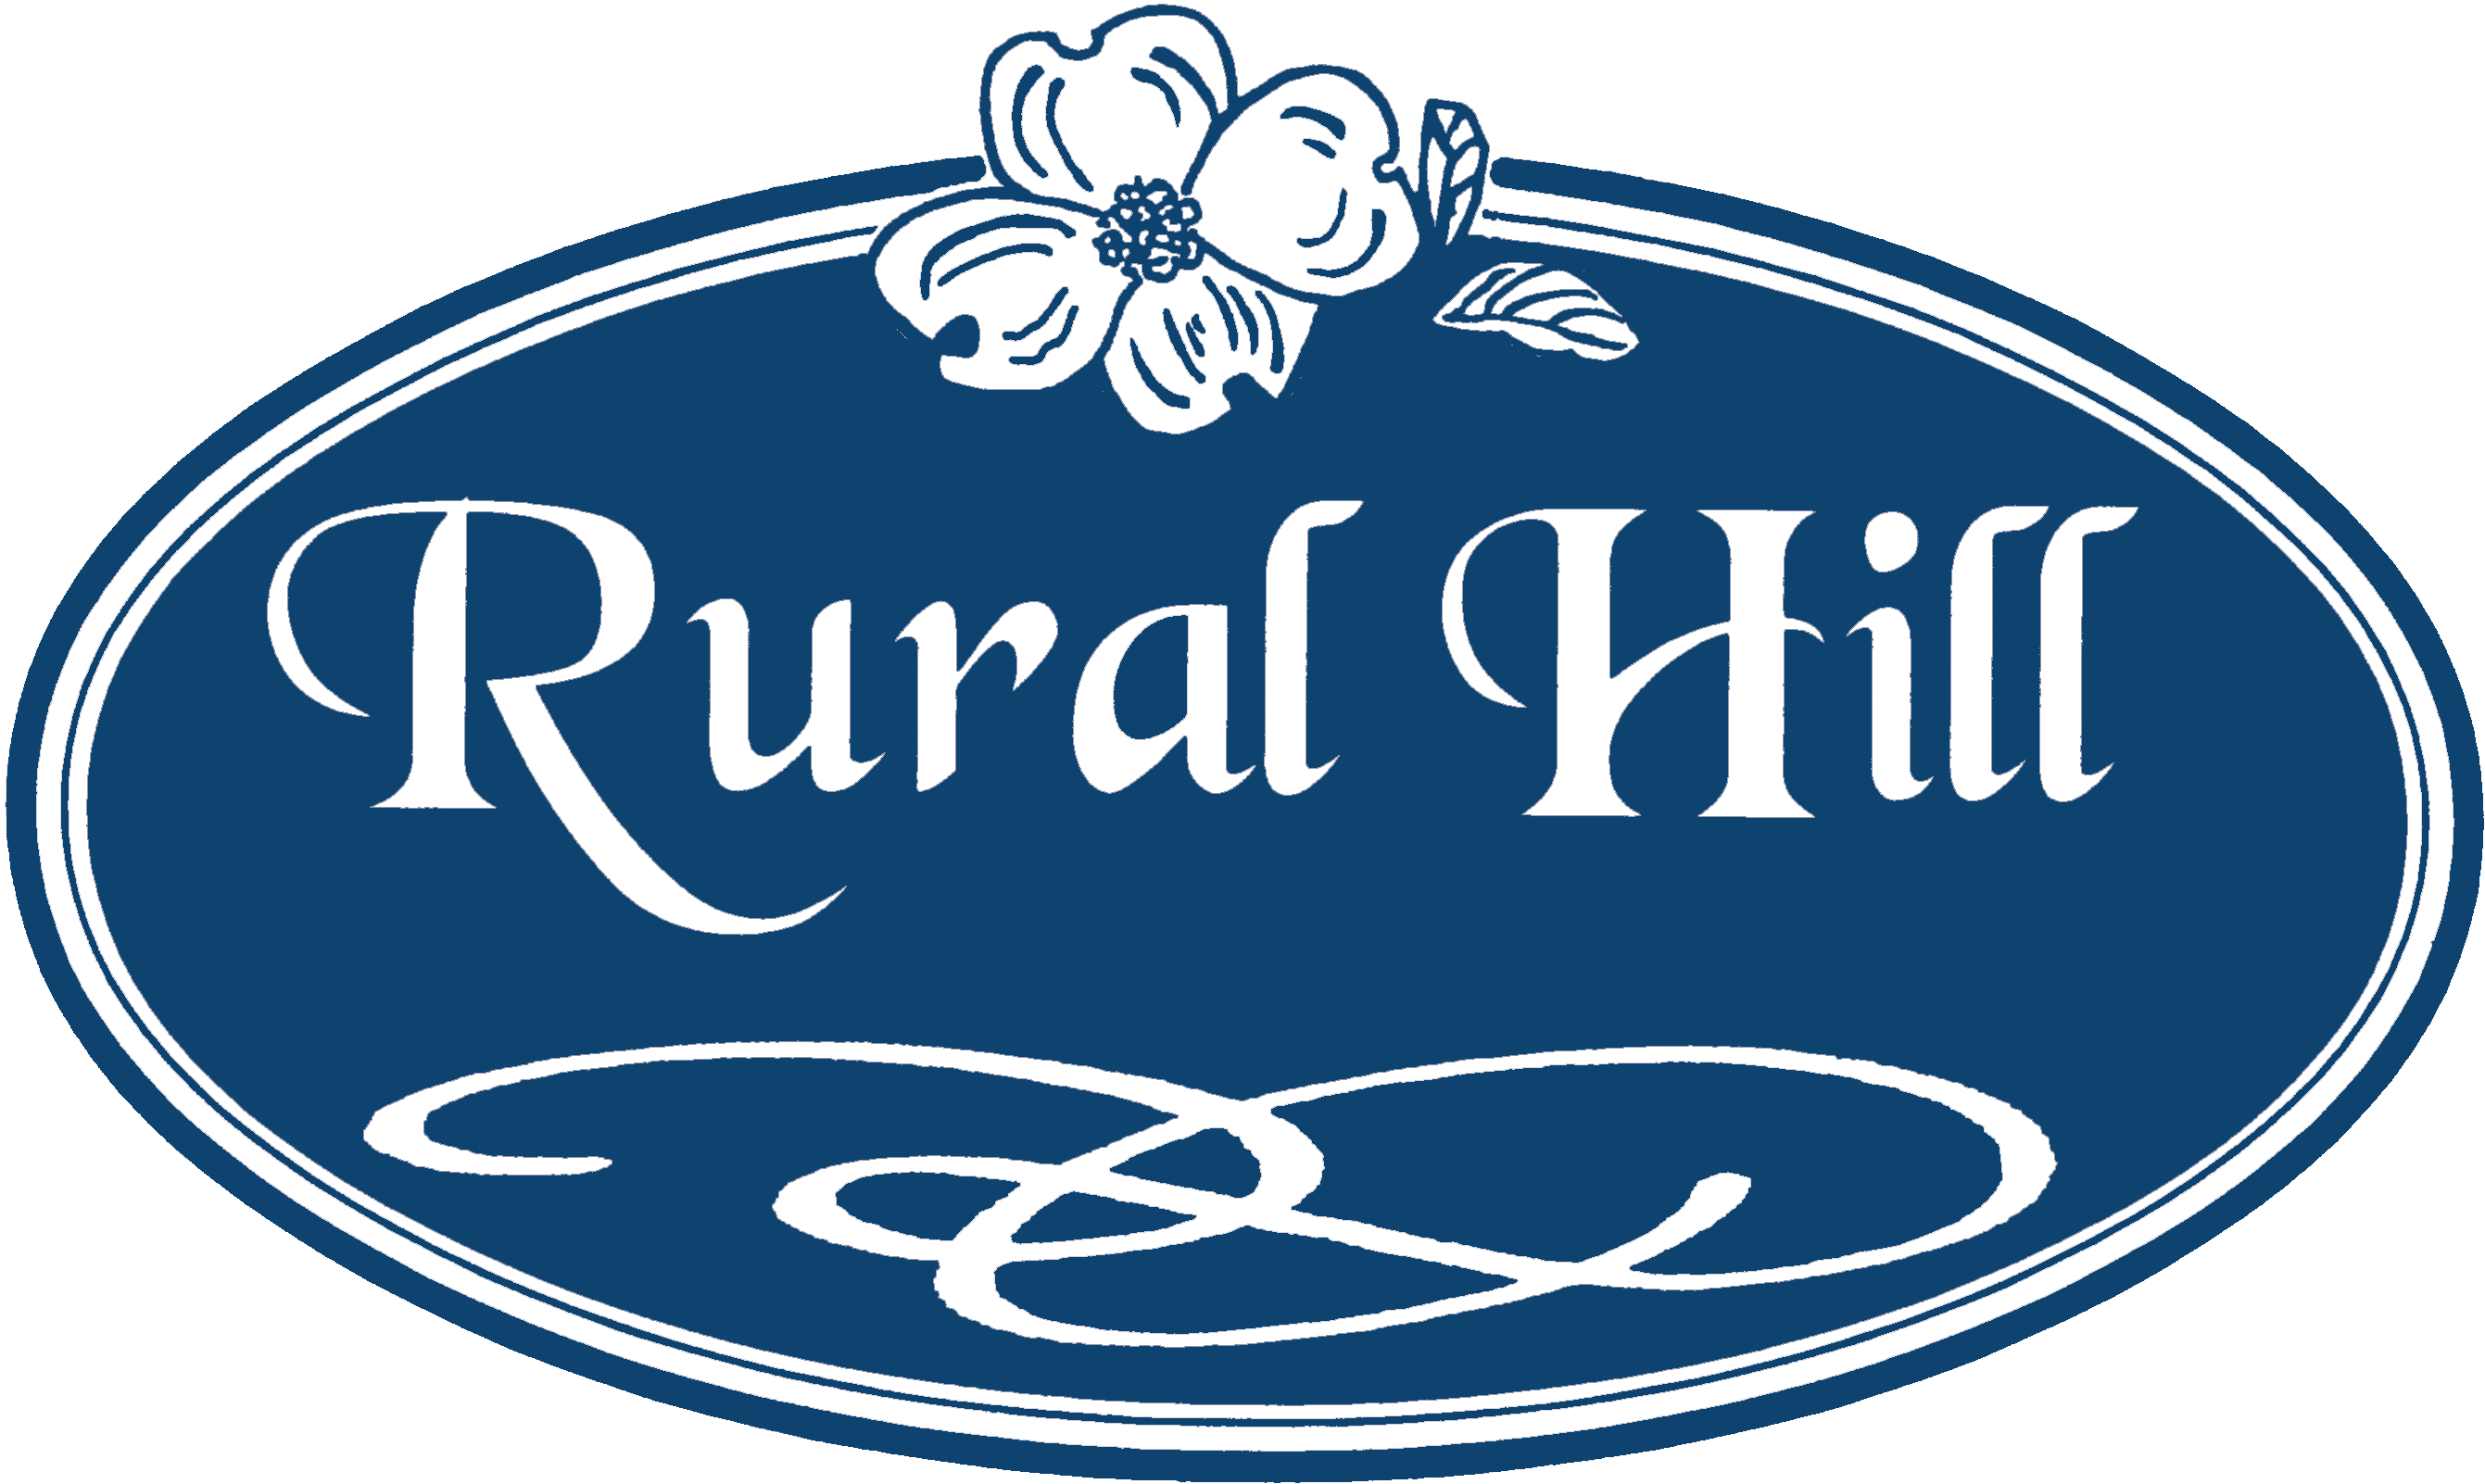 Historic Rural Hill